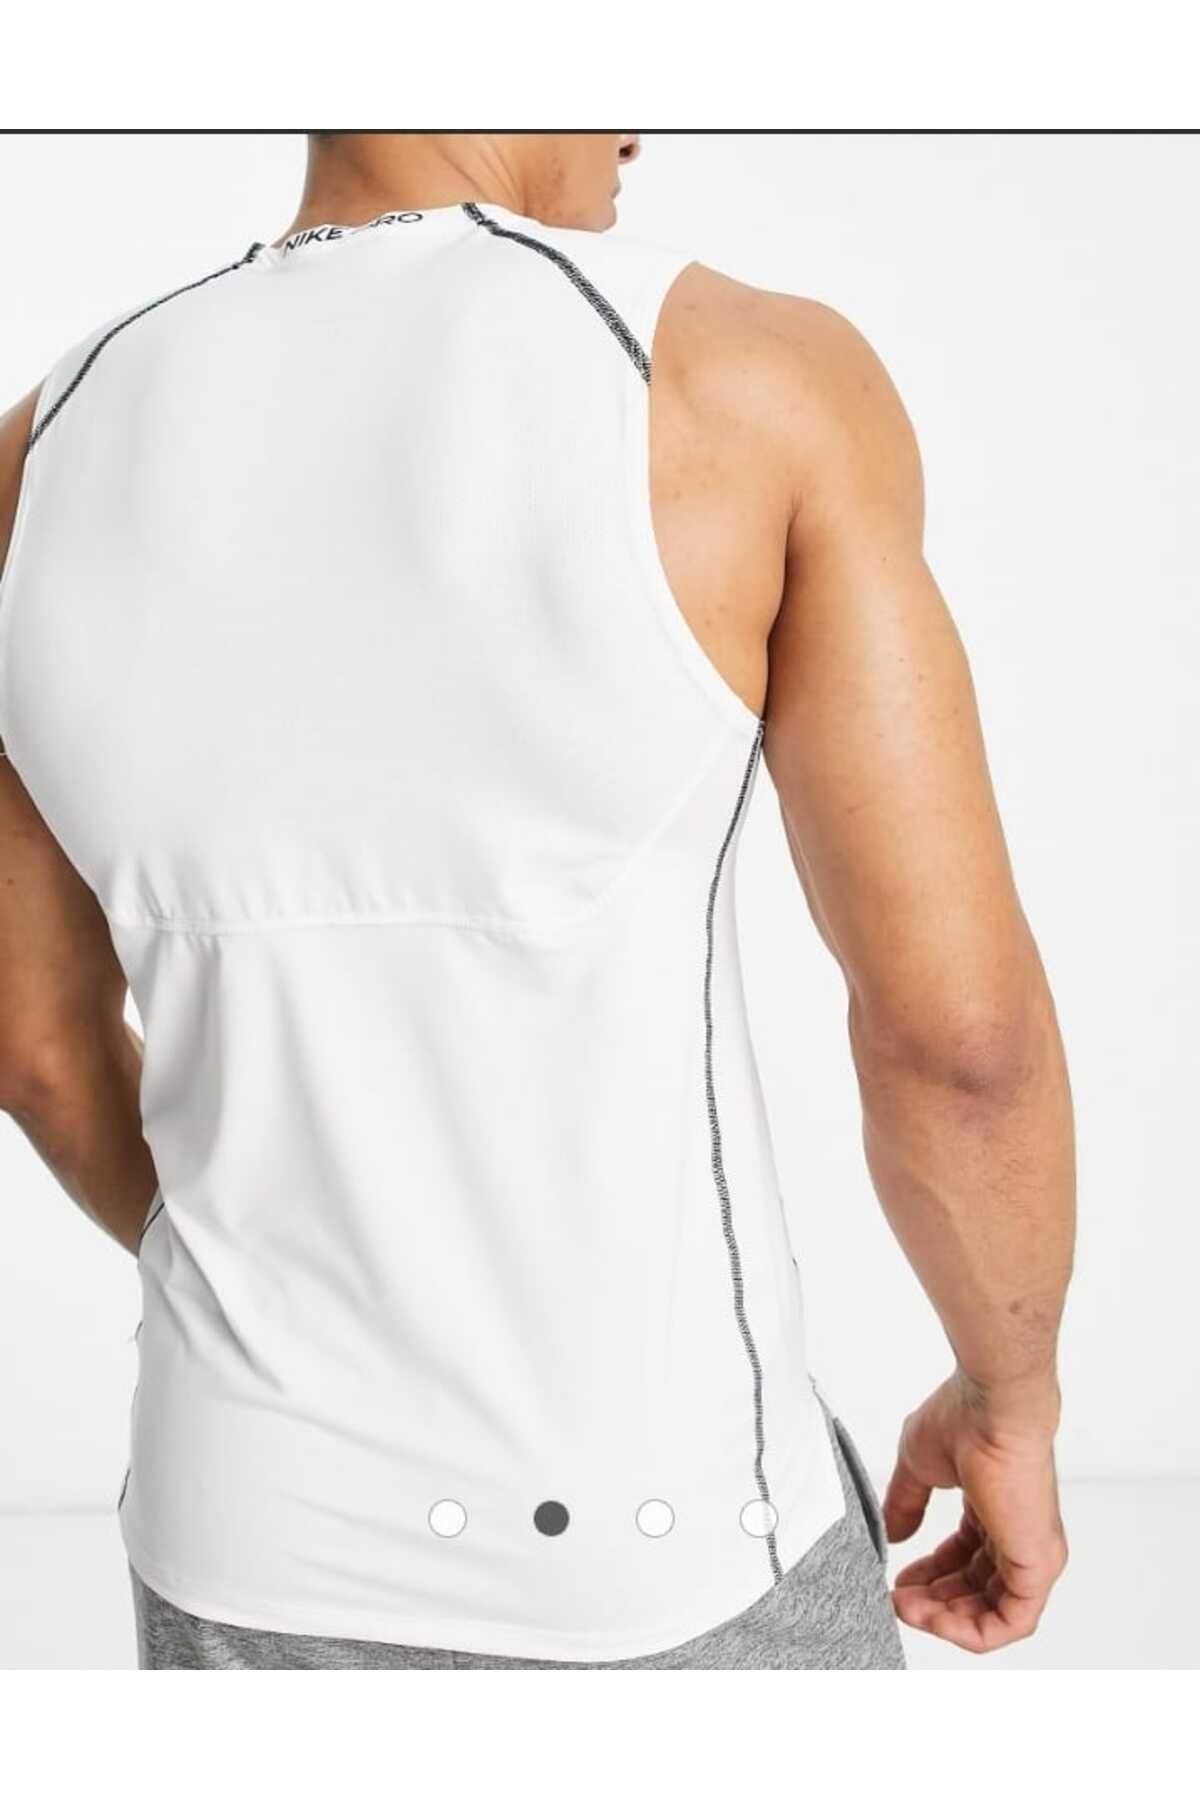 Nike Pro Dri-FIT Men's Tight-Fit Short-Sleeve Top - Trendyol